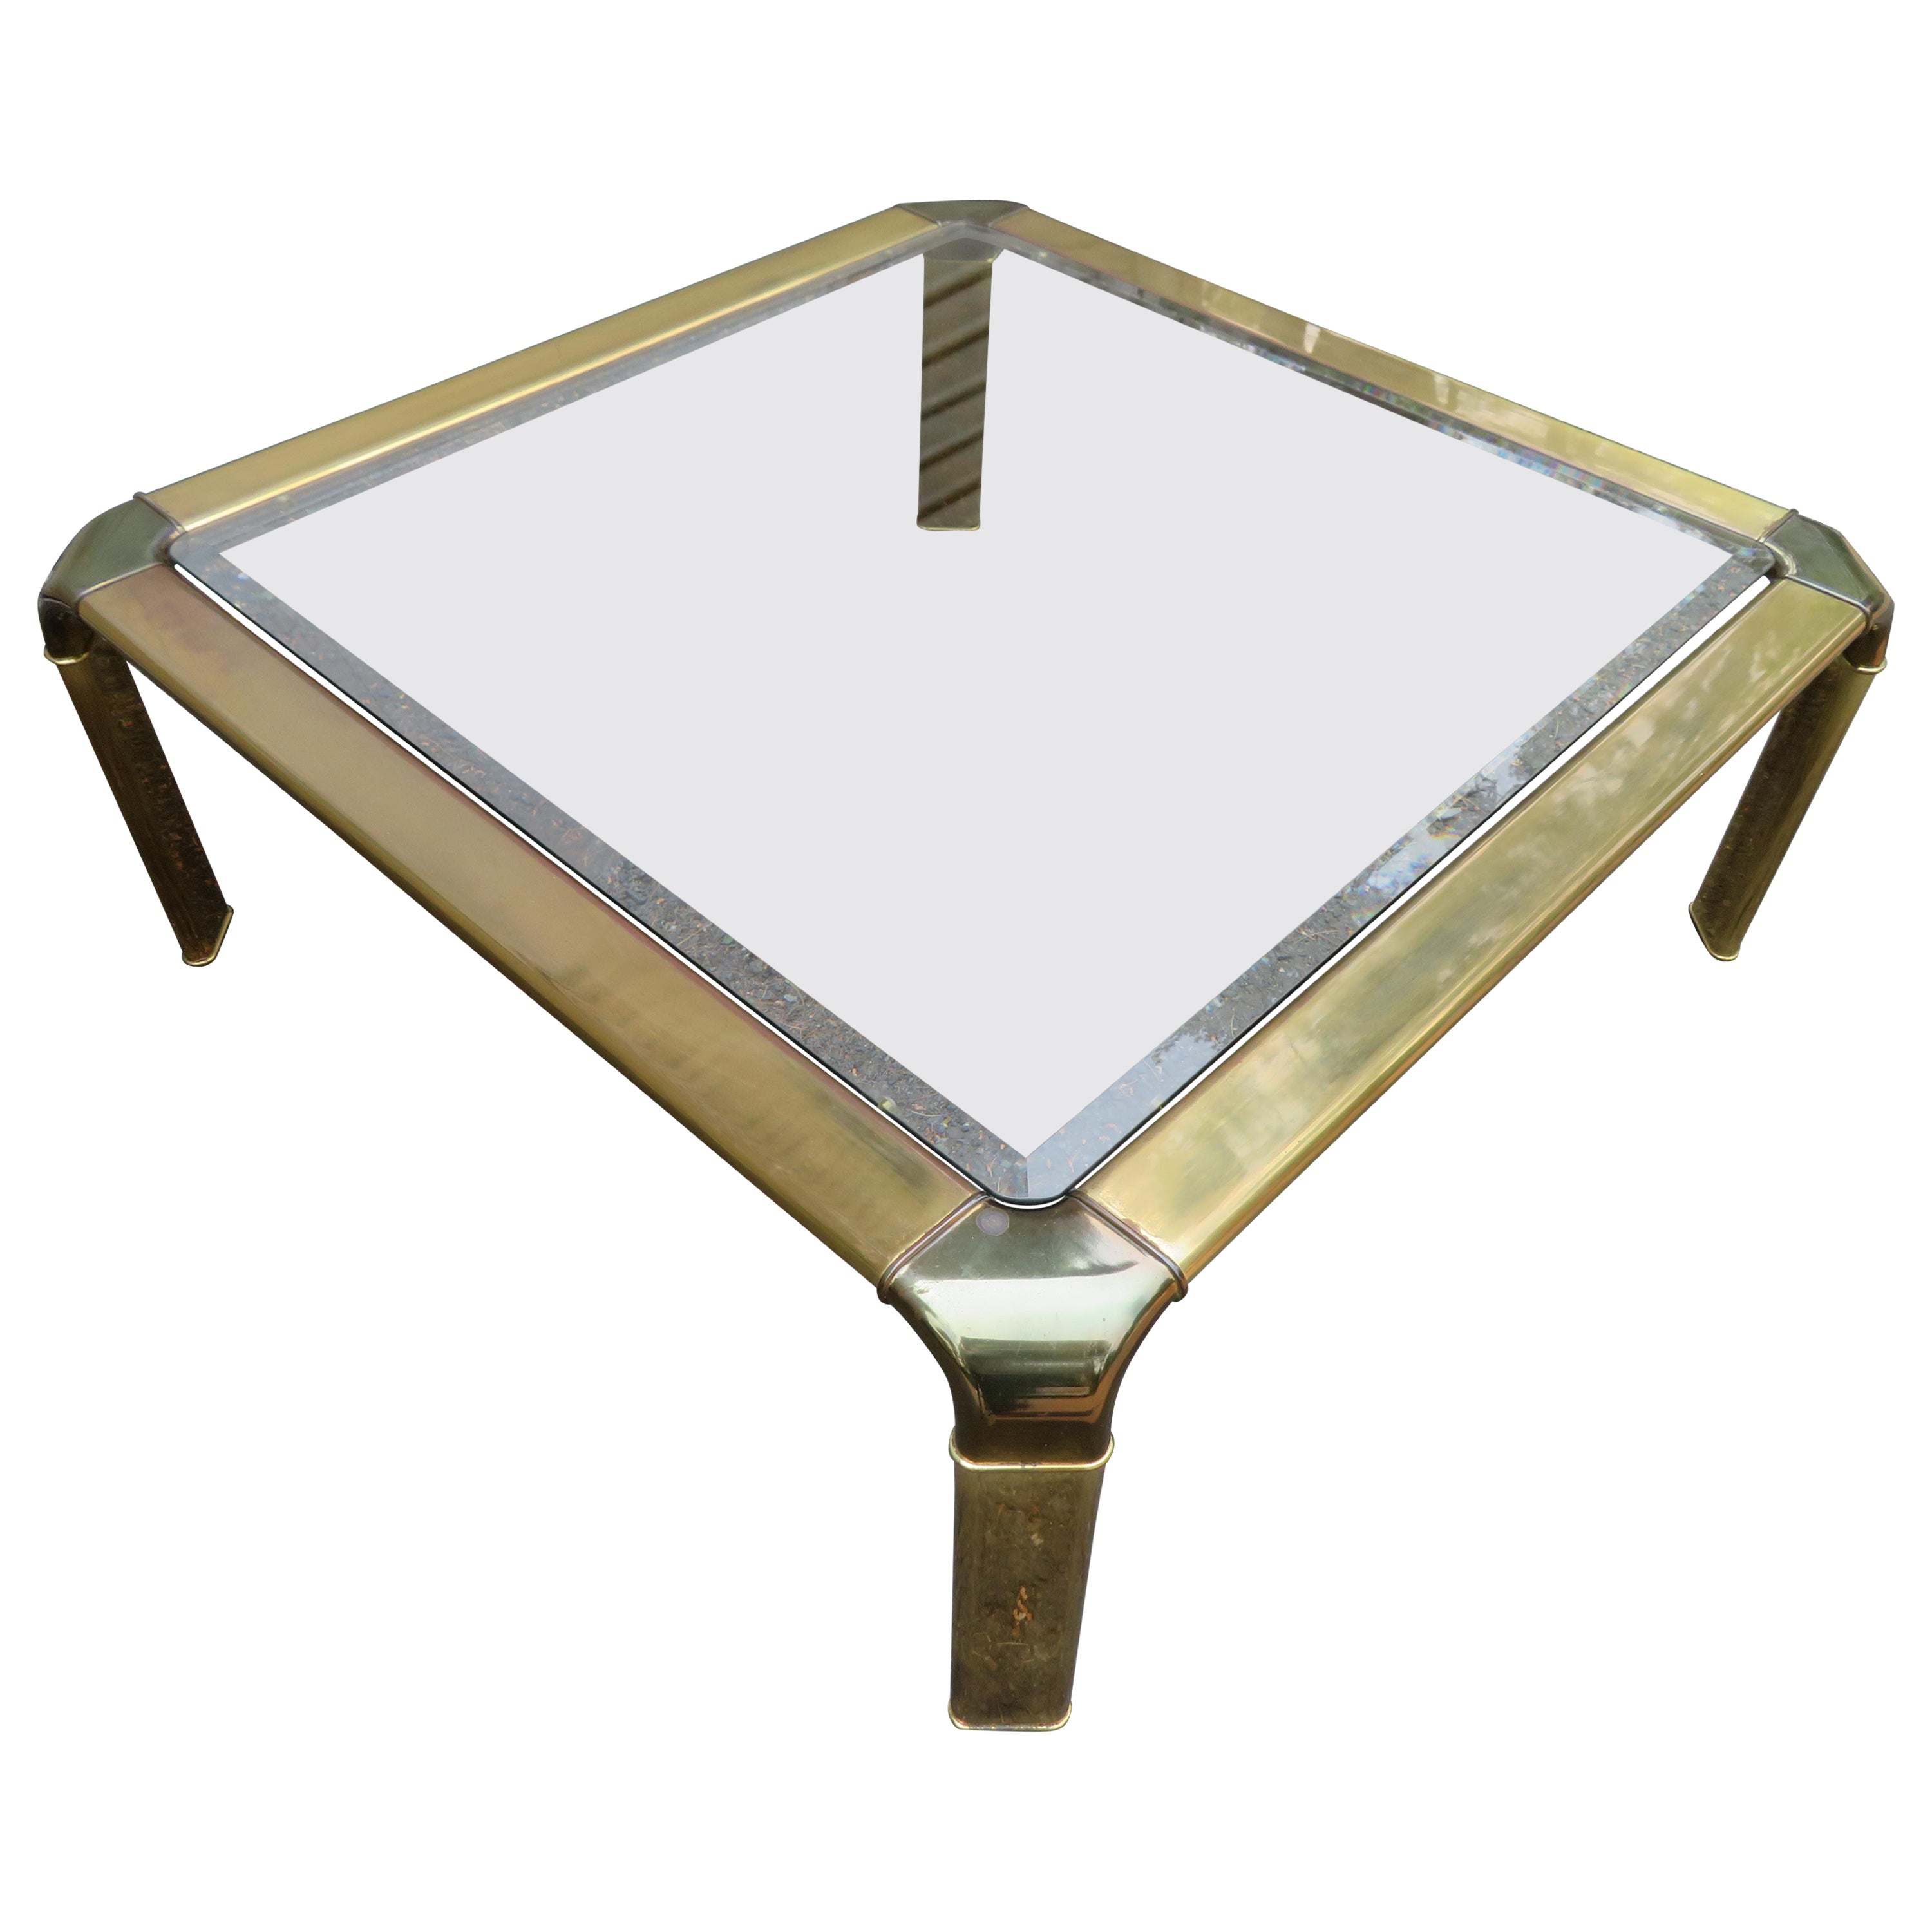 Wonderful Brass Widdicomb Mastercraft Square Coffee Table Mid Century Modern For Sale